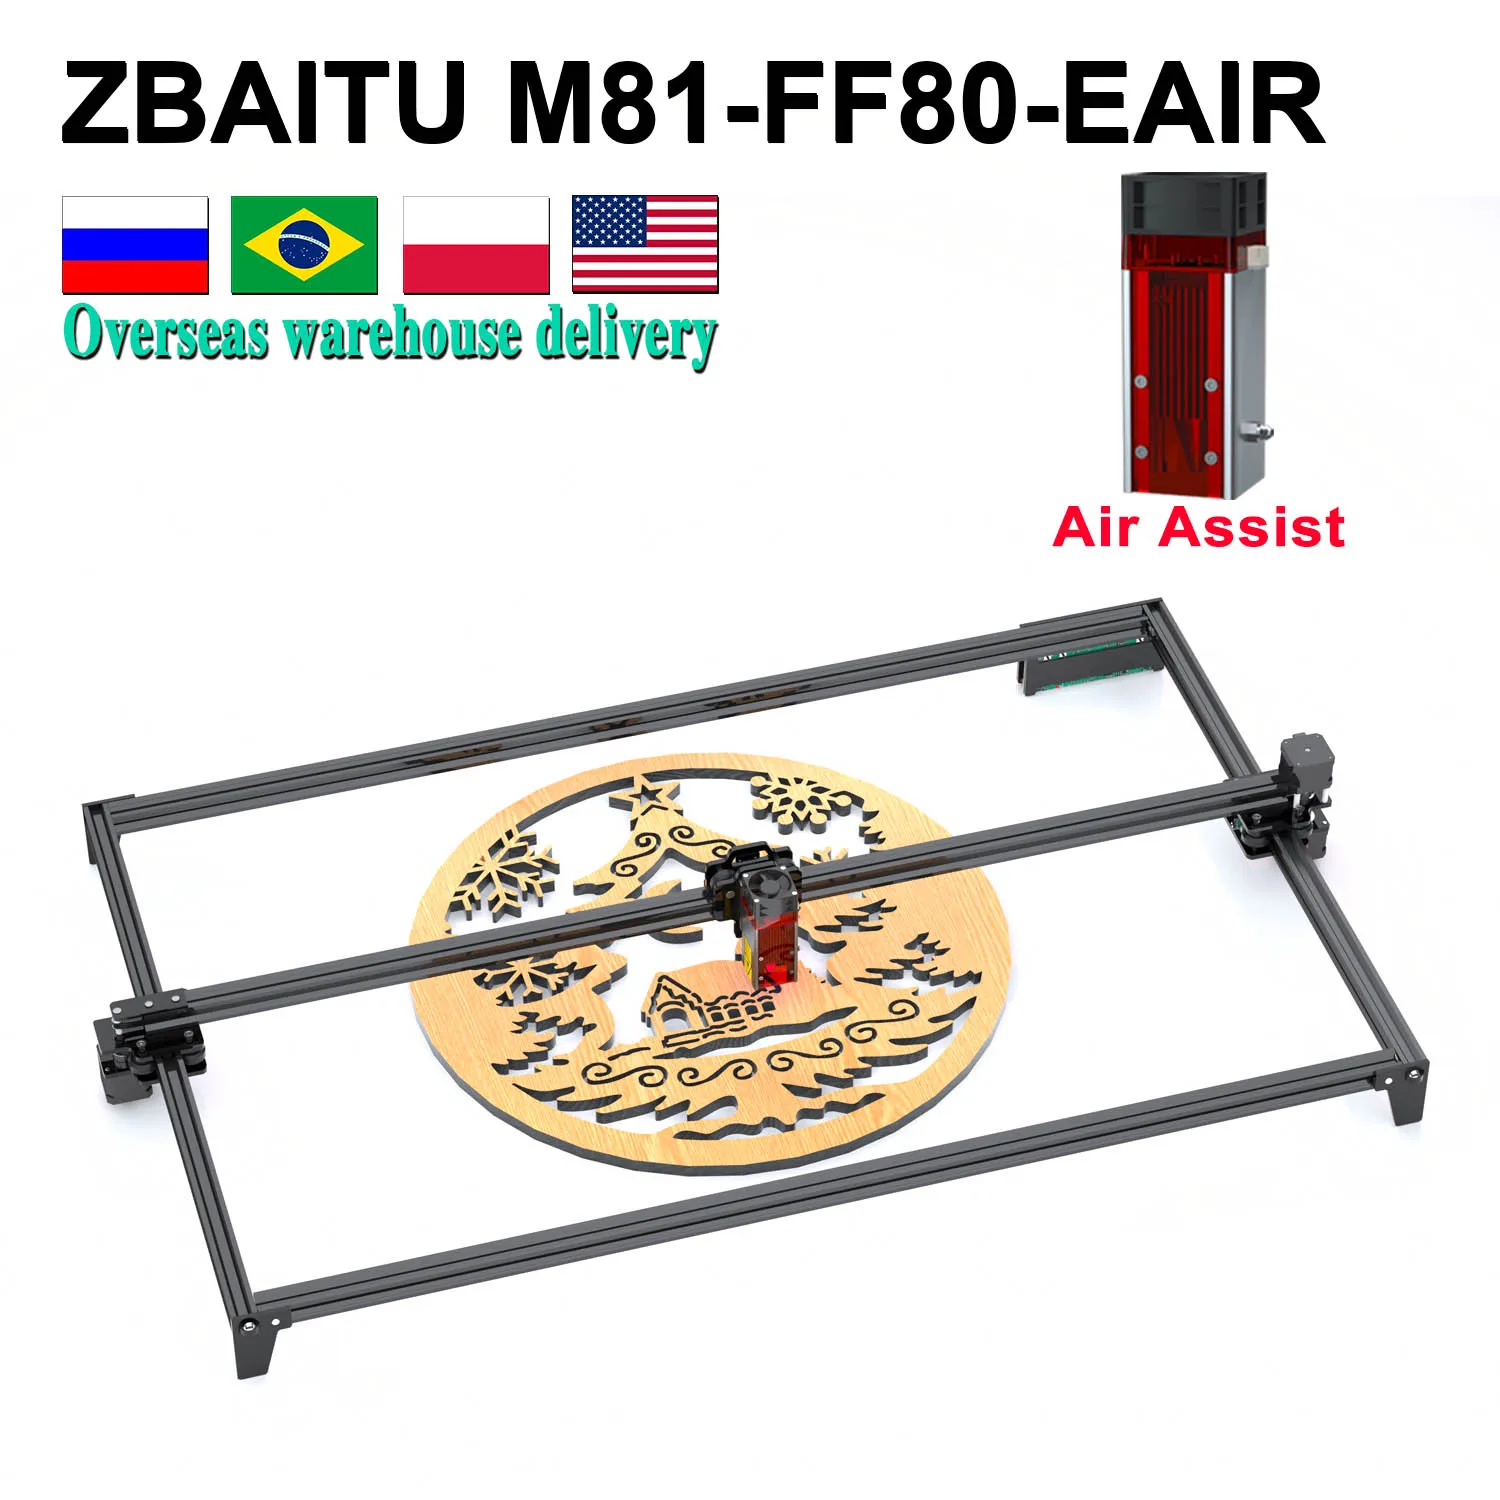 ZBAITU Laser Engraver Cutter 80W CNC Laser Cutting Machine Air Assisted FF80-EAIR Laser Module CNC Machine For Wood